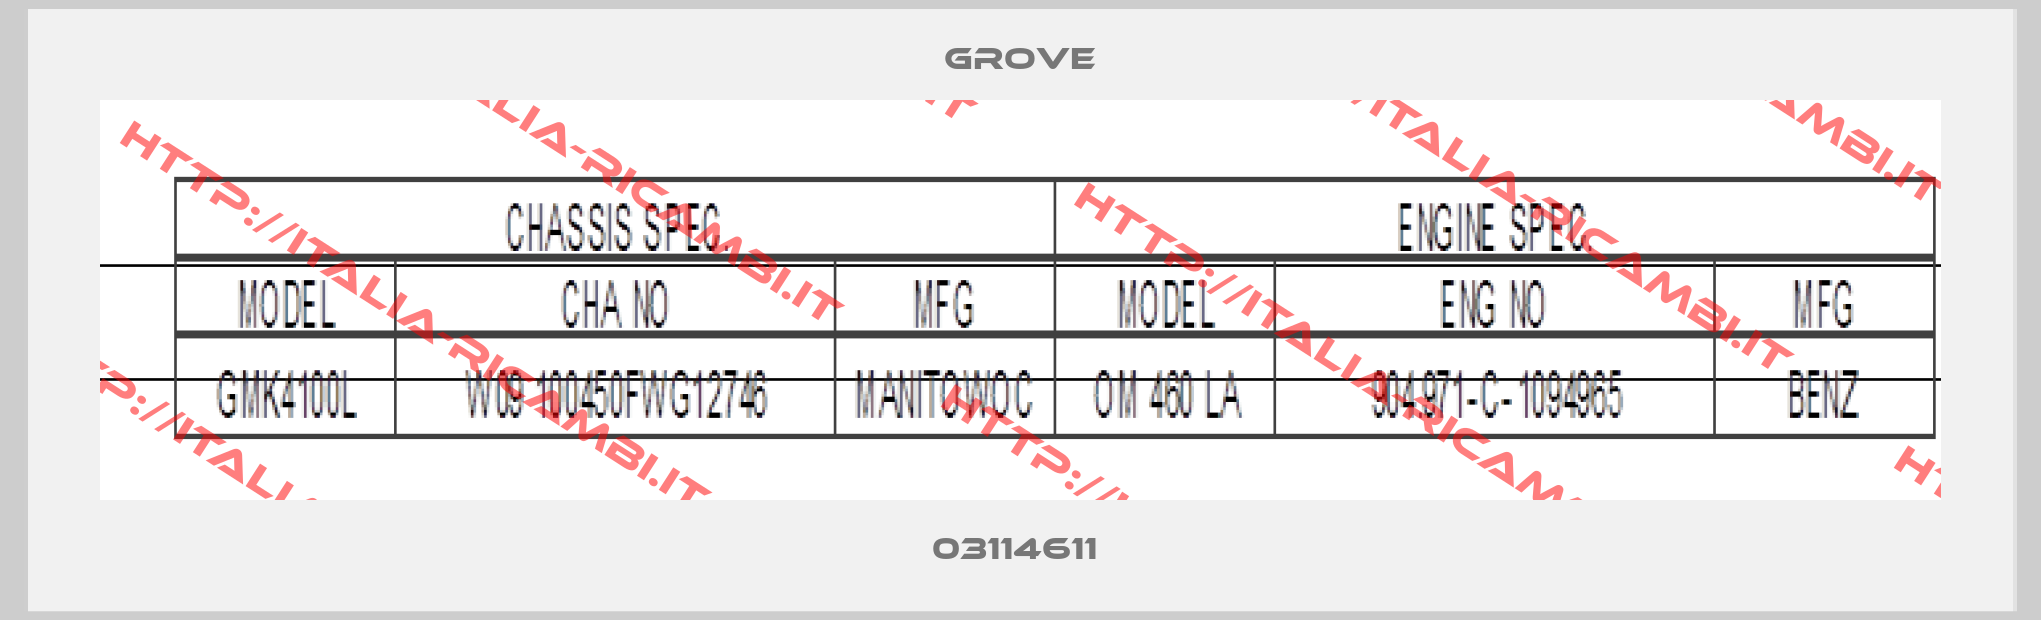 Grove-03114611 